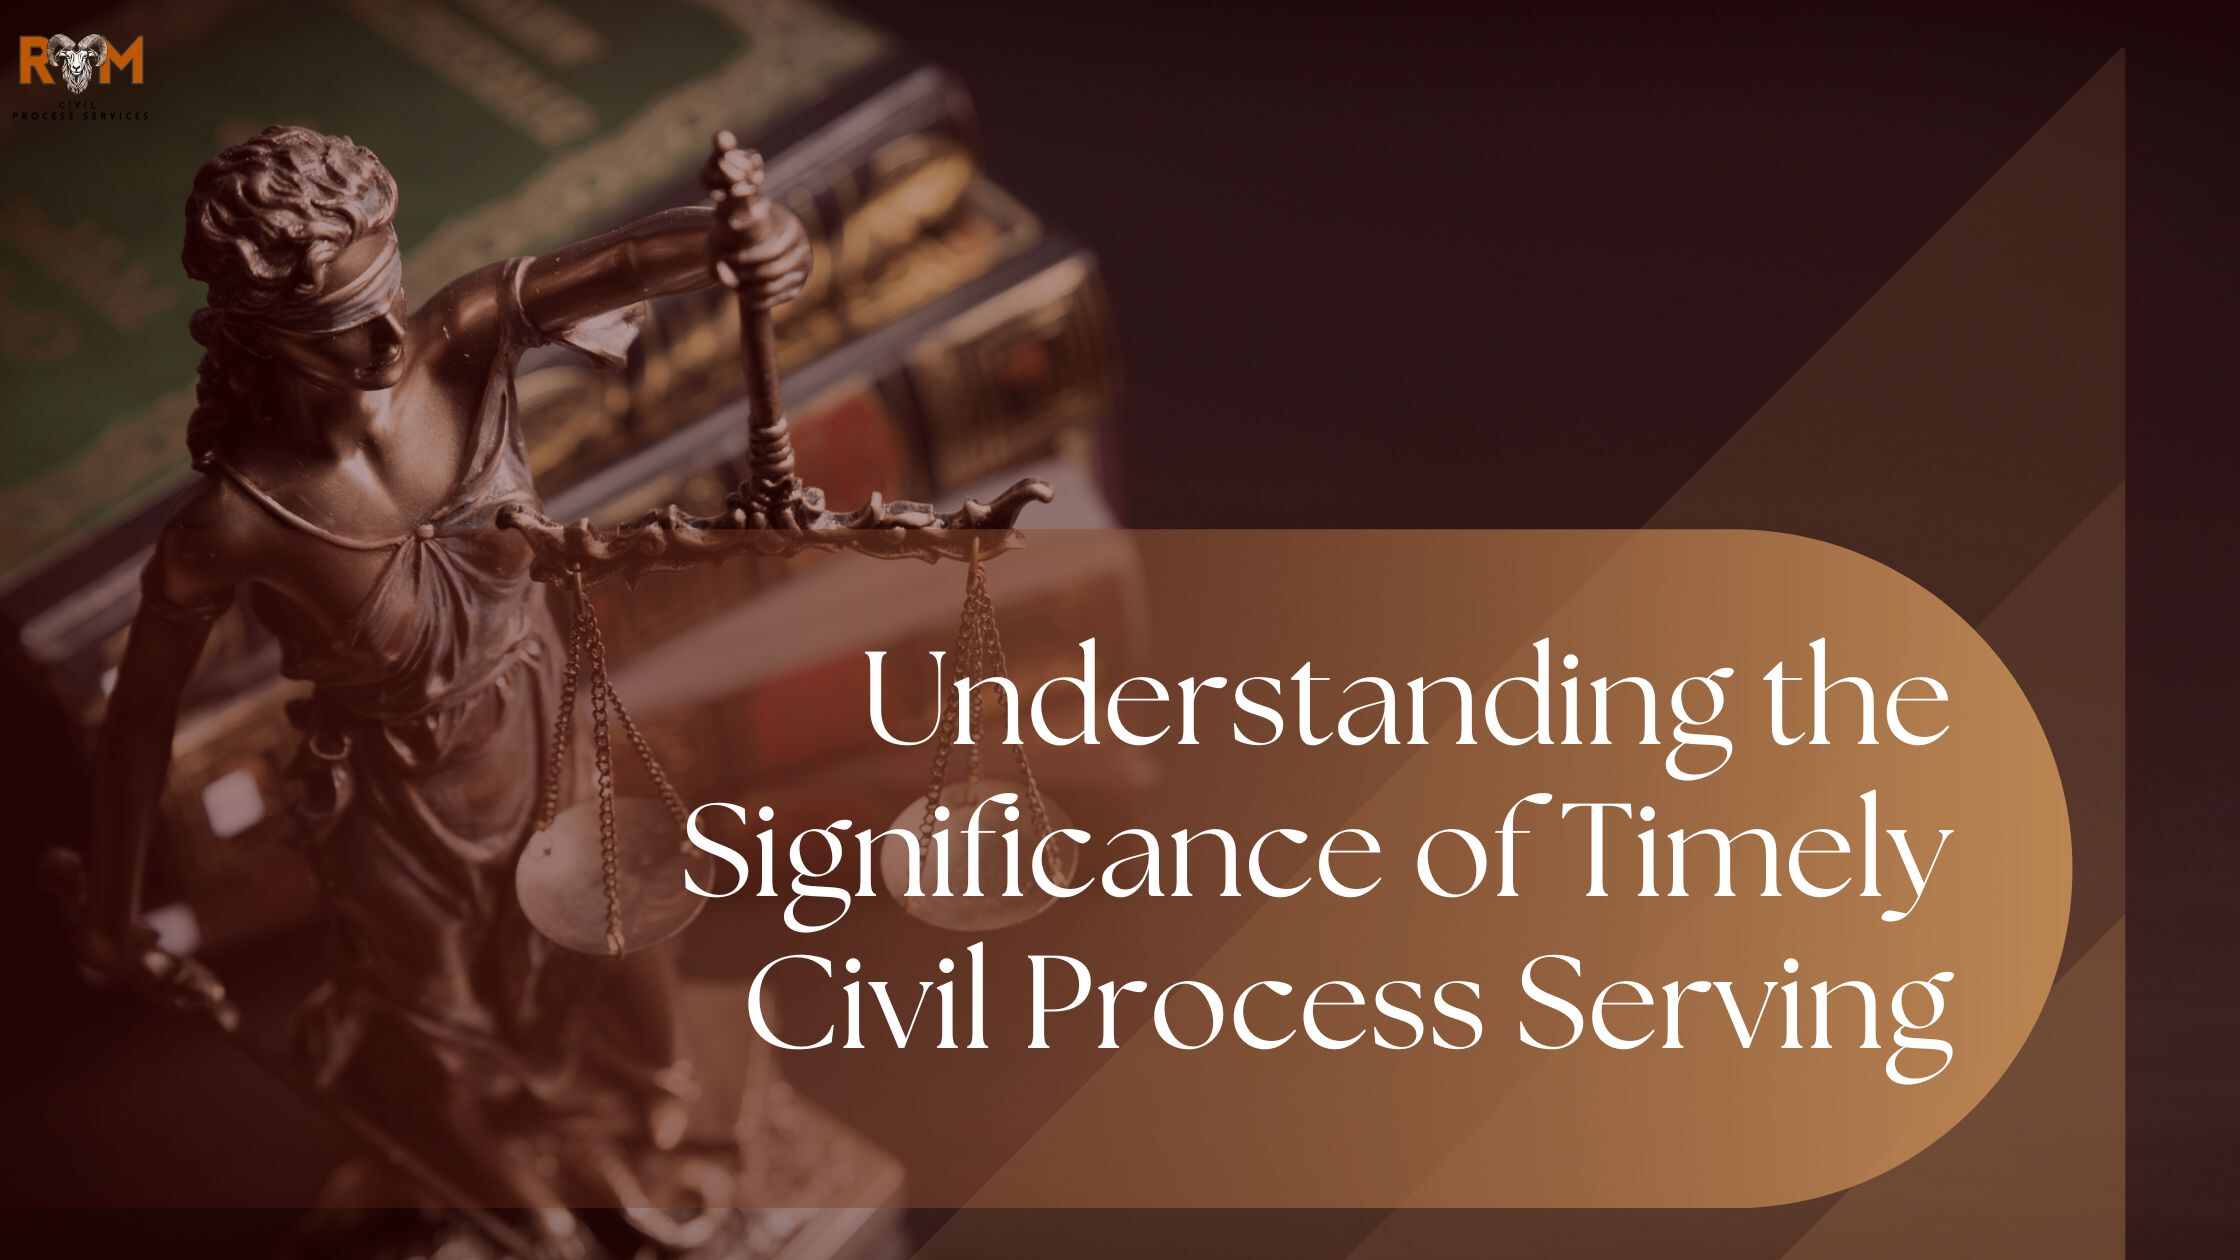 Civil Process Serving